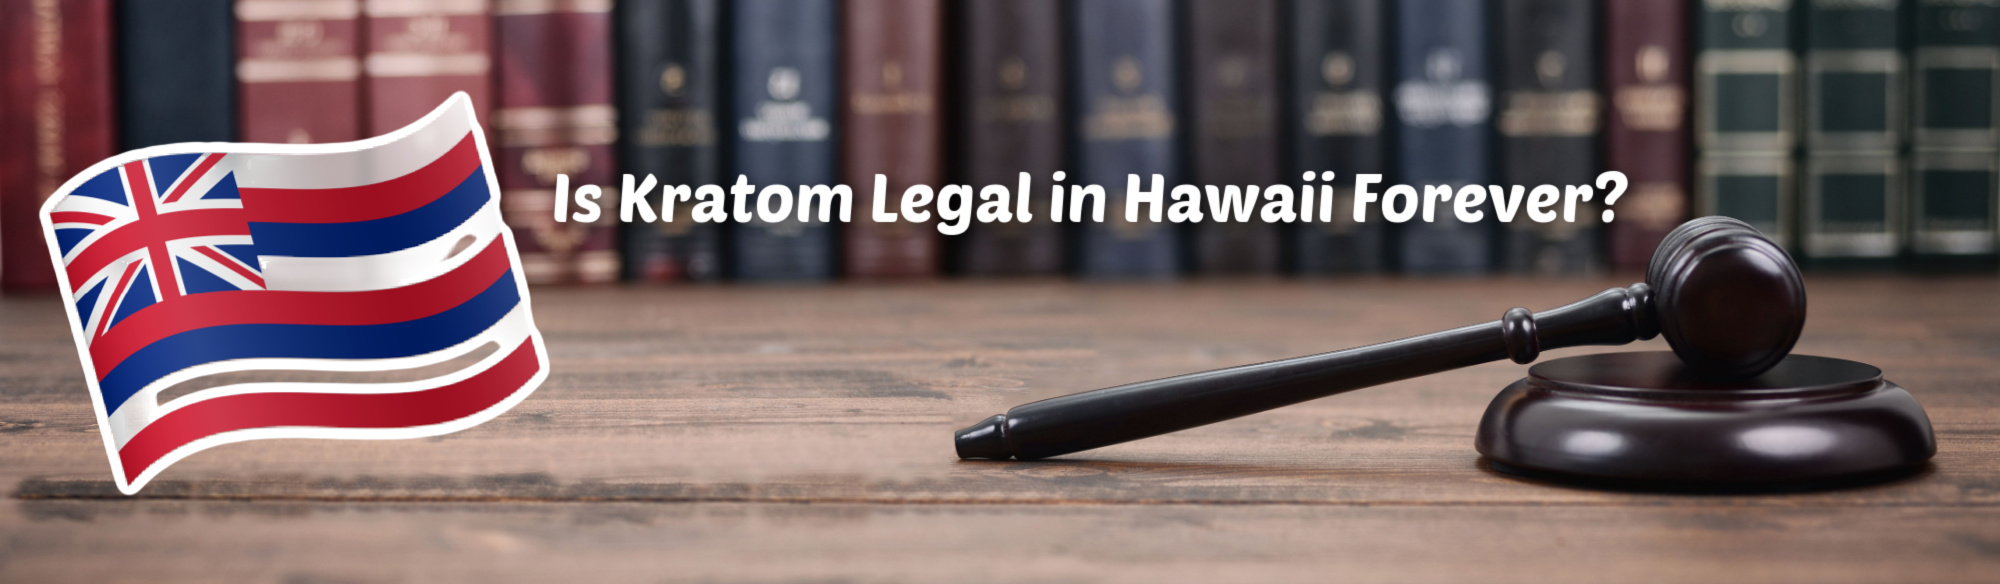 image of is kratom legal in hawaii forever